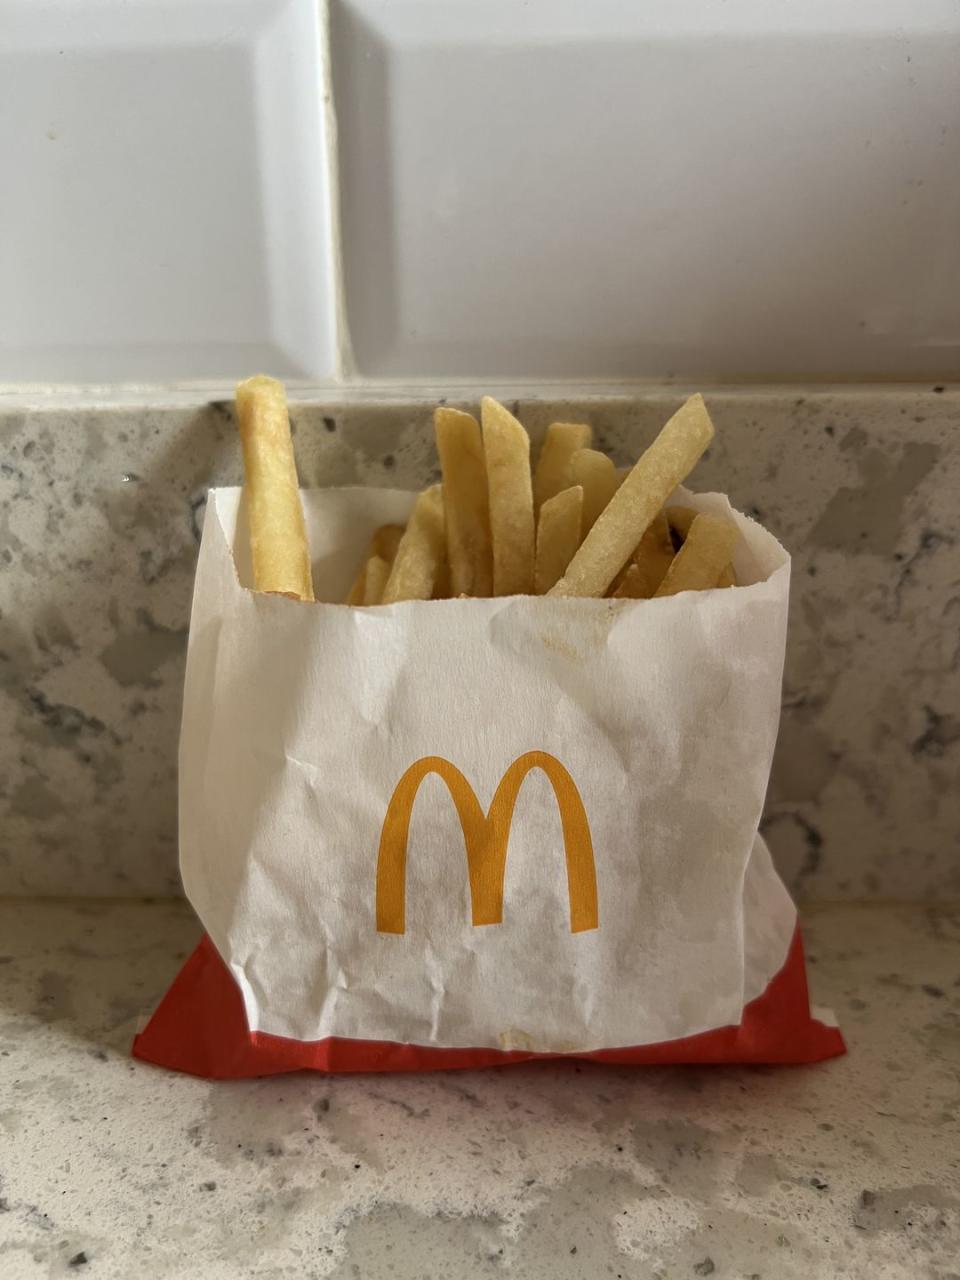 mcdonalds fries